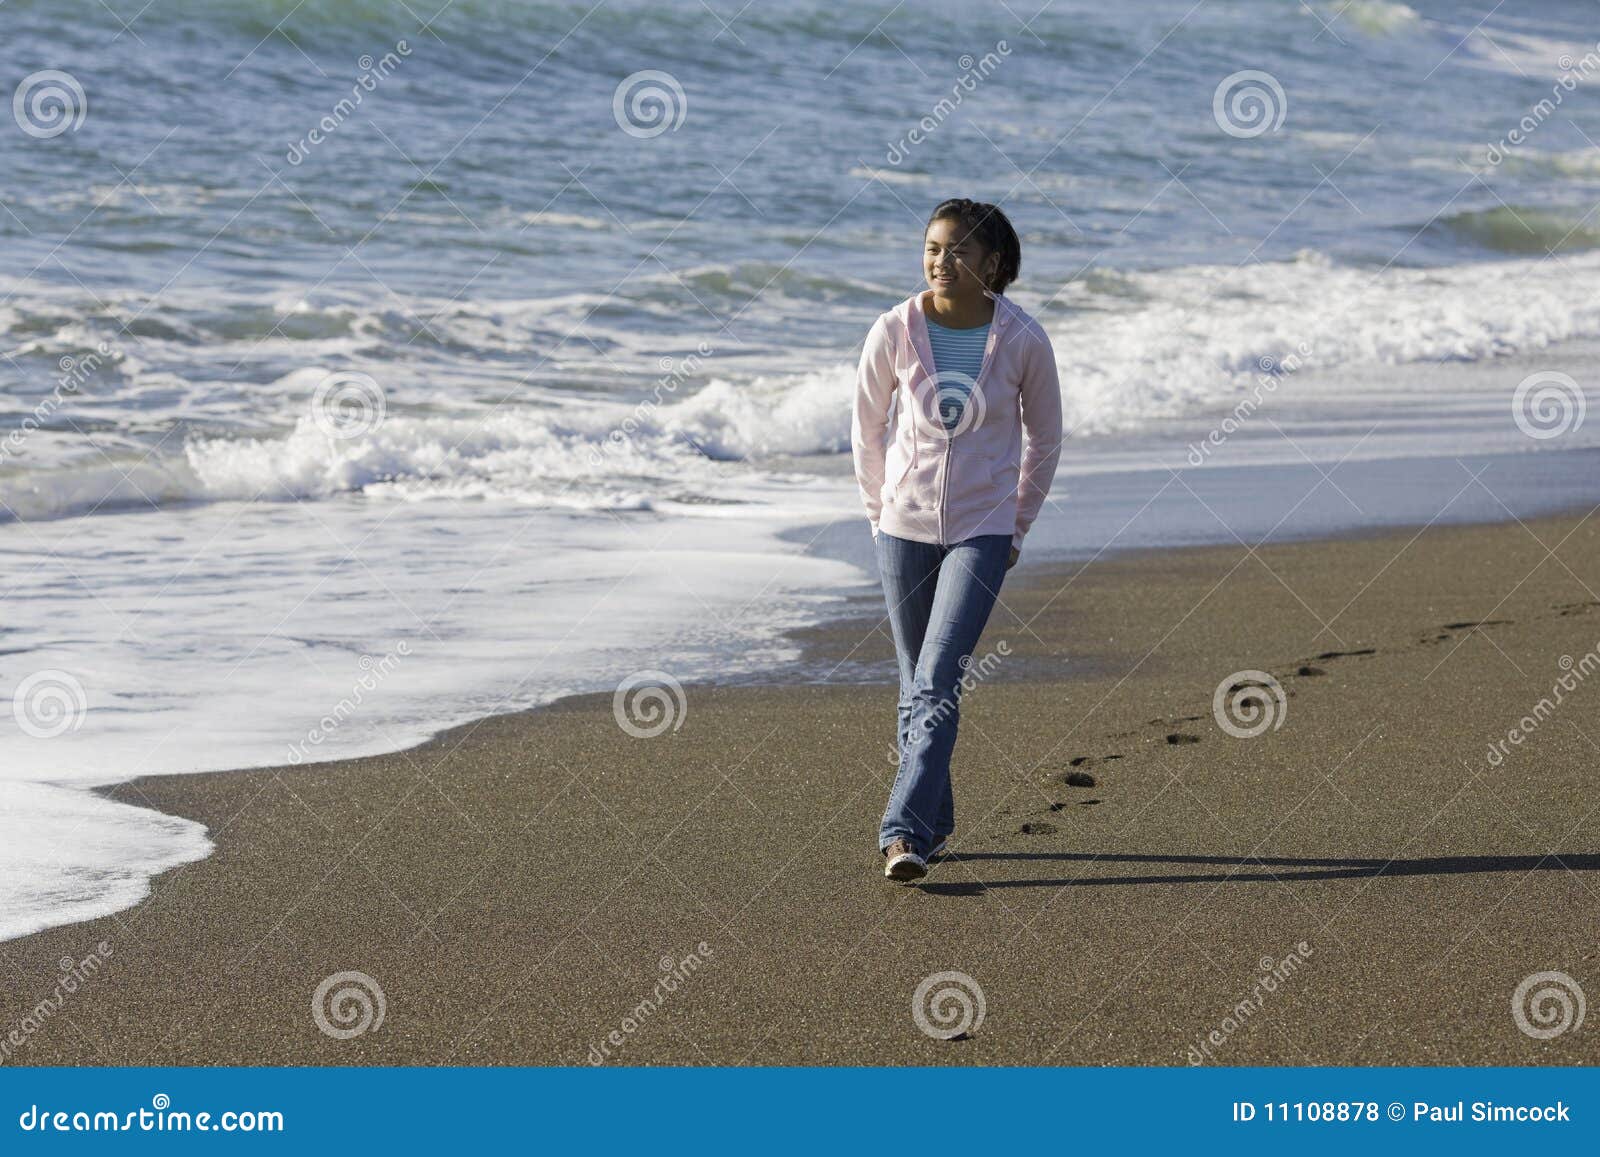 Teenager Girl Enjoying At The Beach 13880405 Stock Photo at Vecteezy